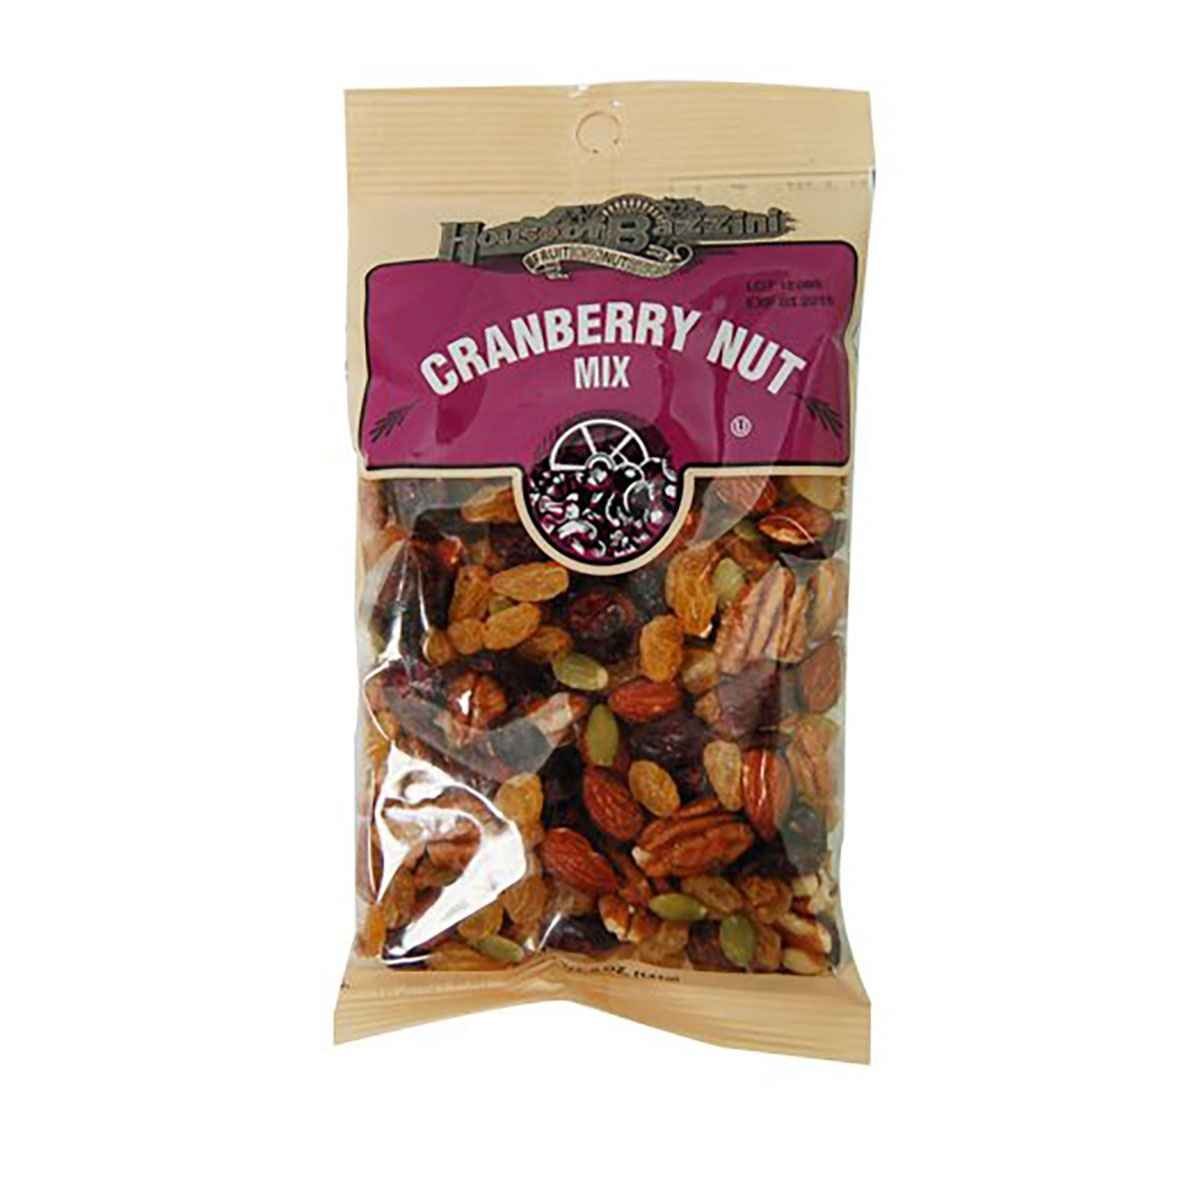 1194521 Cranberry - Nut Mix, 5 Oz - Case Of 12